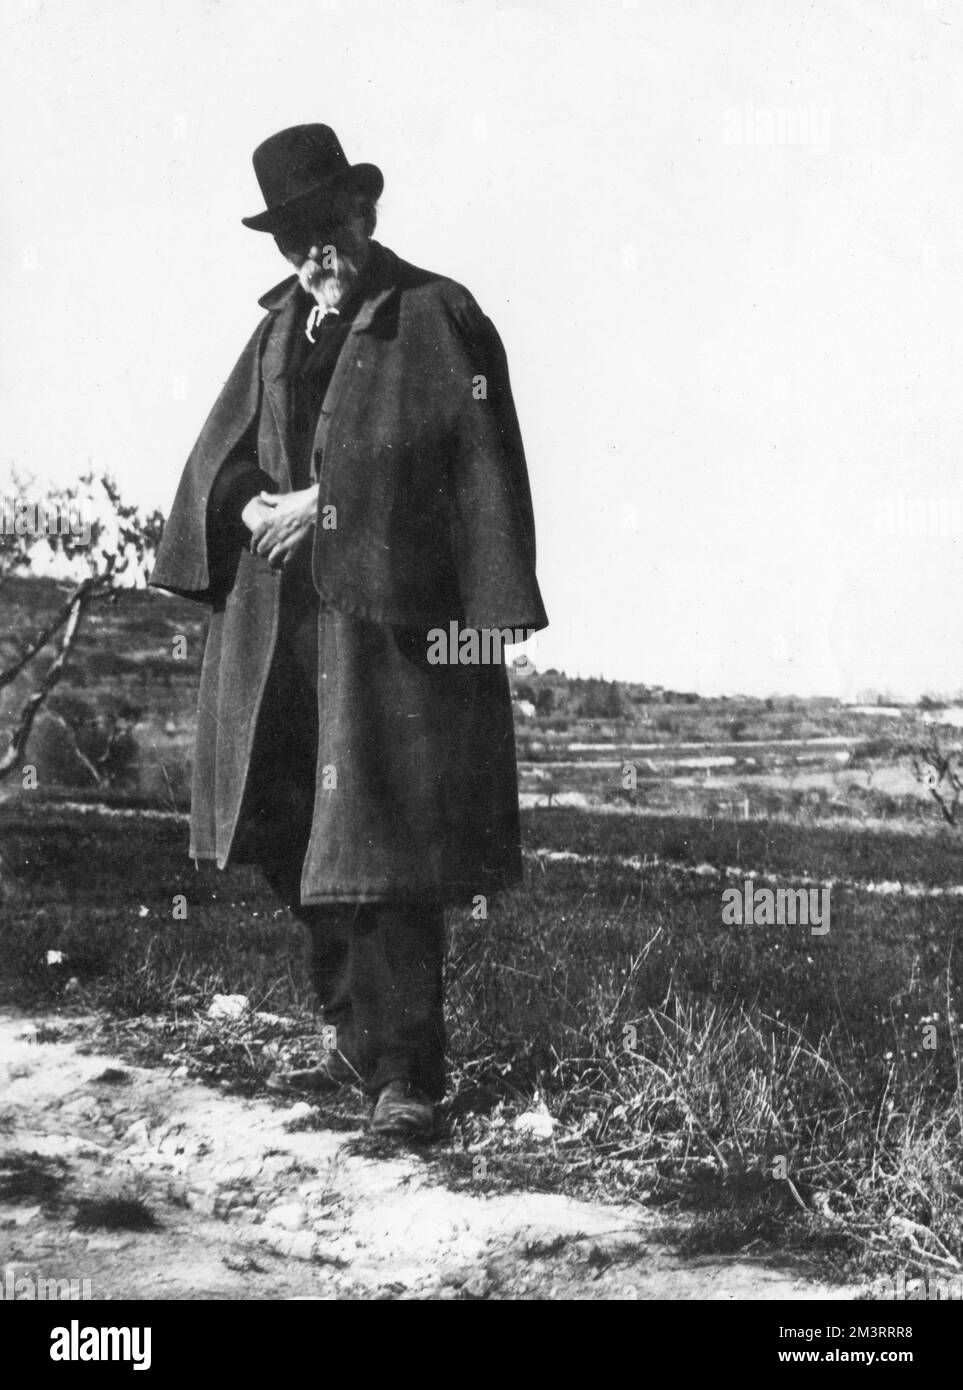 Paul Cezanne (1839-1906), französischer Künstler, 1904 in seiner Heimatstadt Aix-en-Provence fotografiert. Datum: 1904 Stockfoto